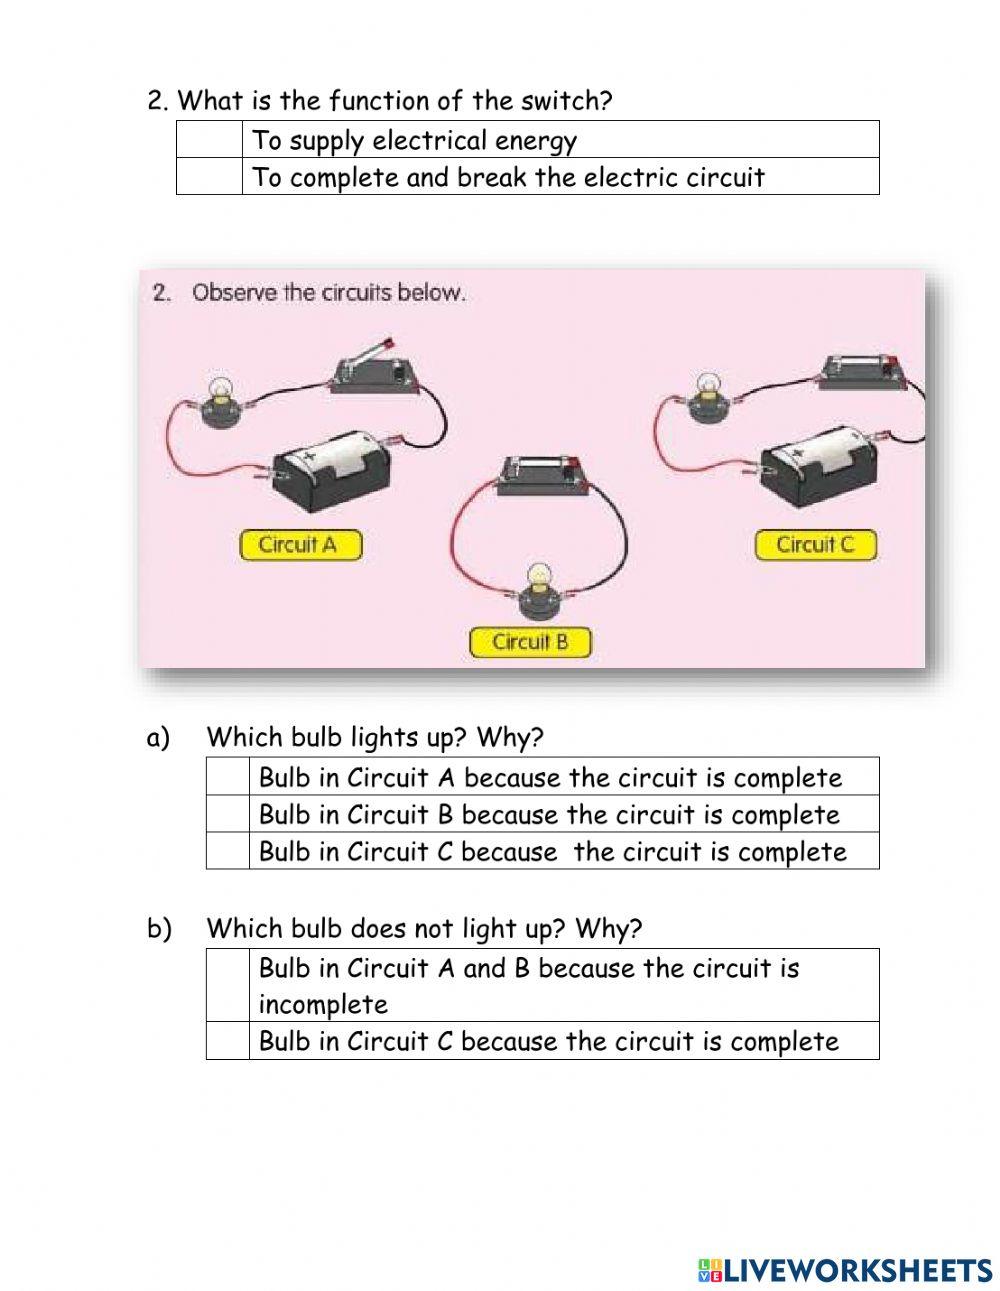 Electric Circuit